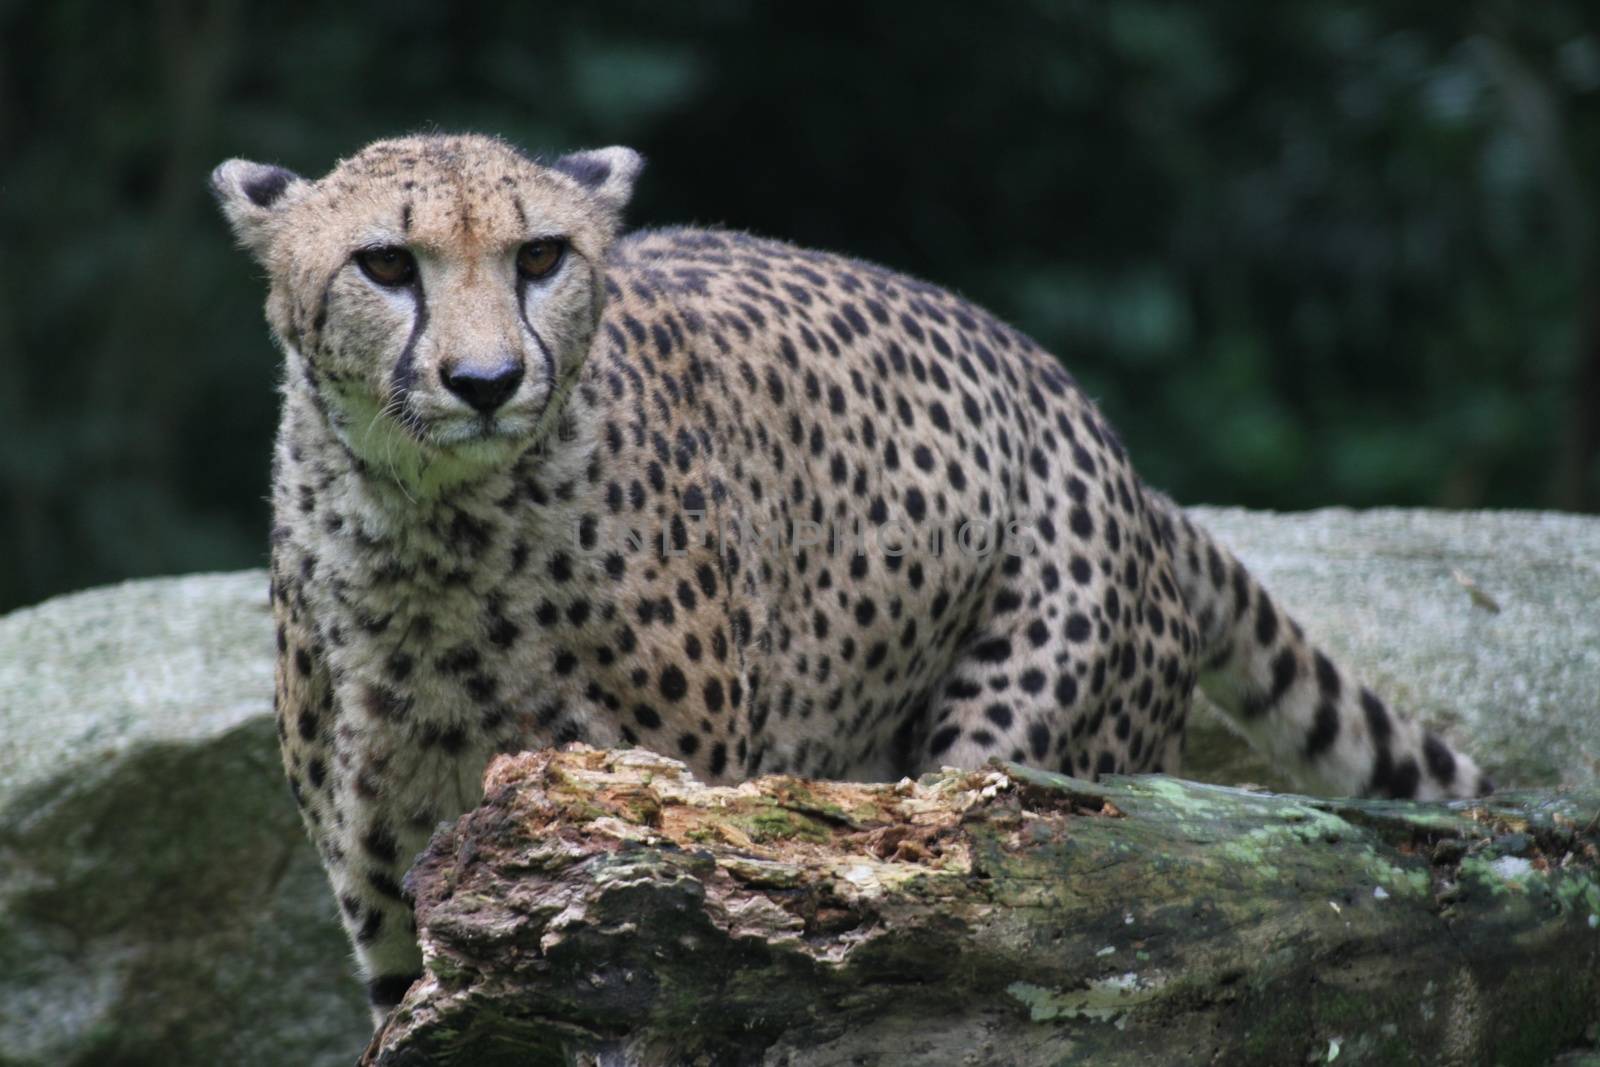 Cheetah by Kitch